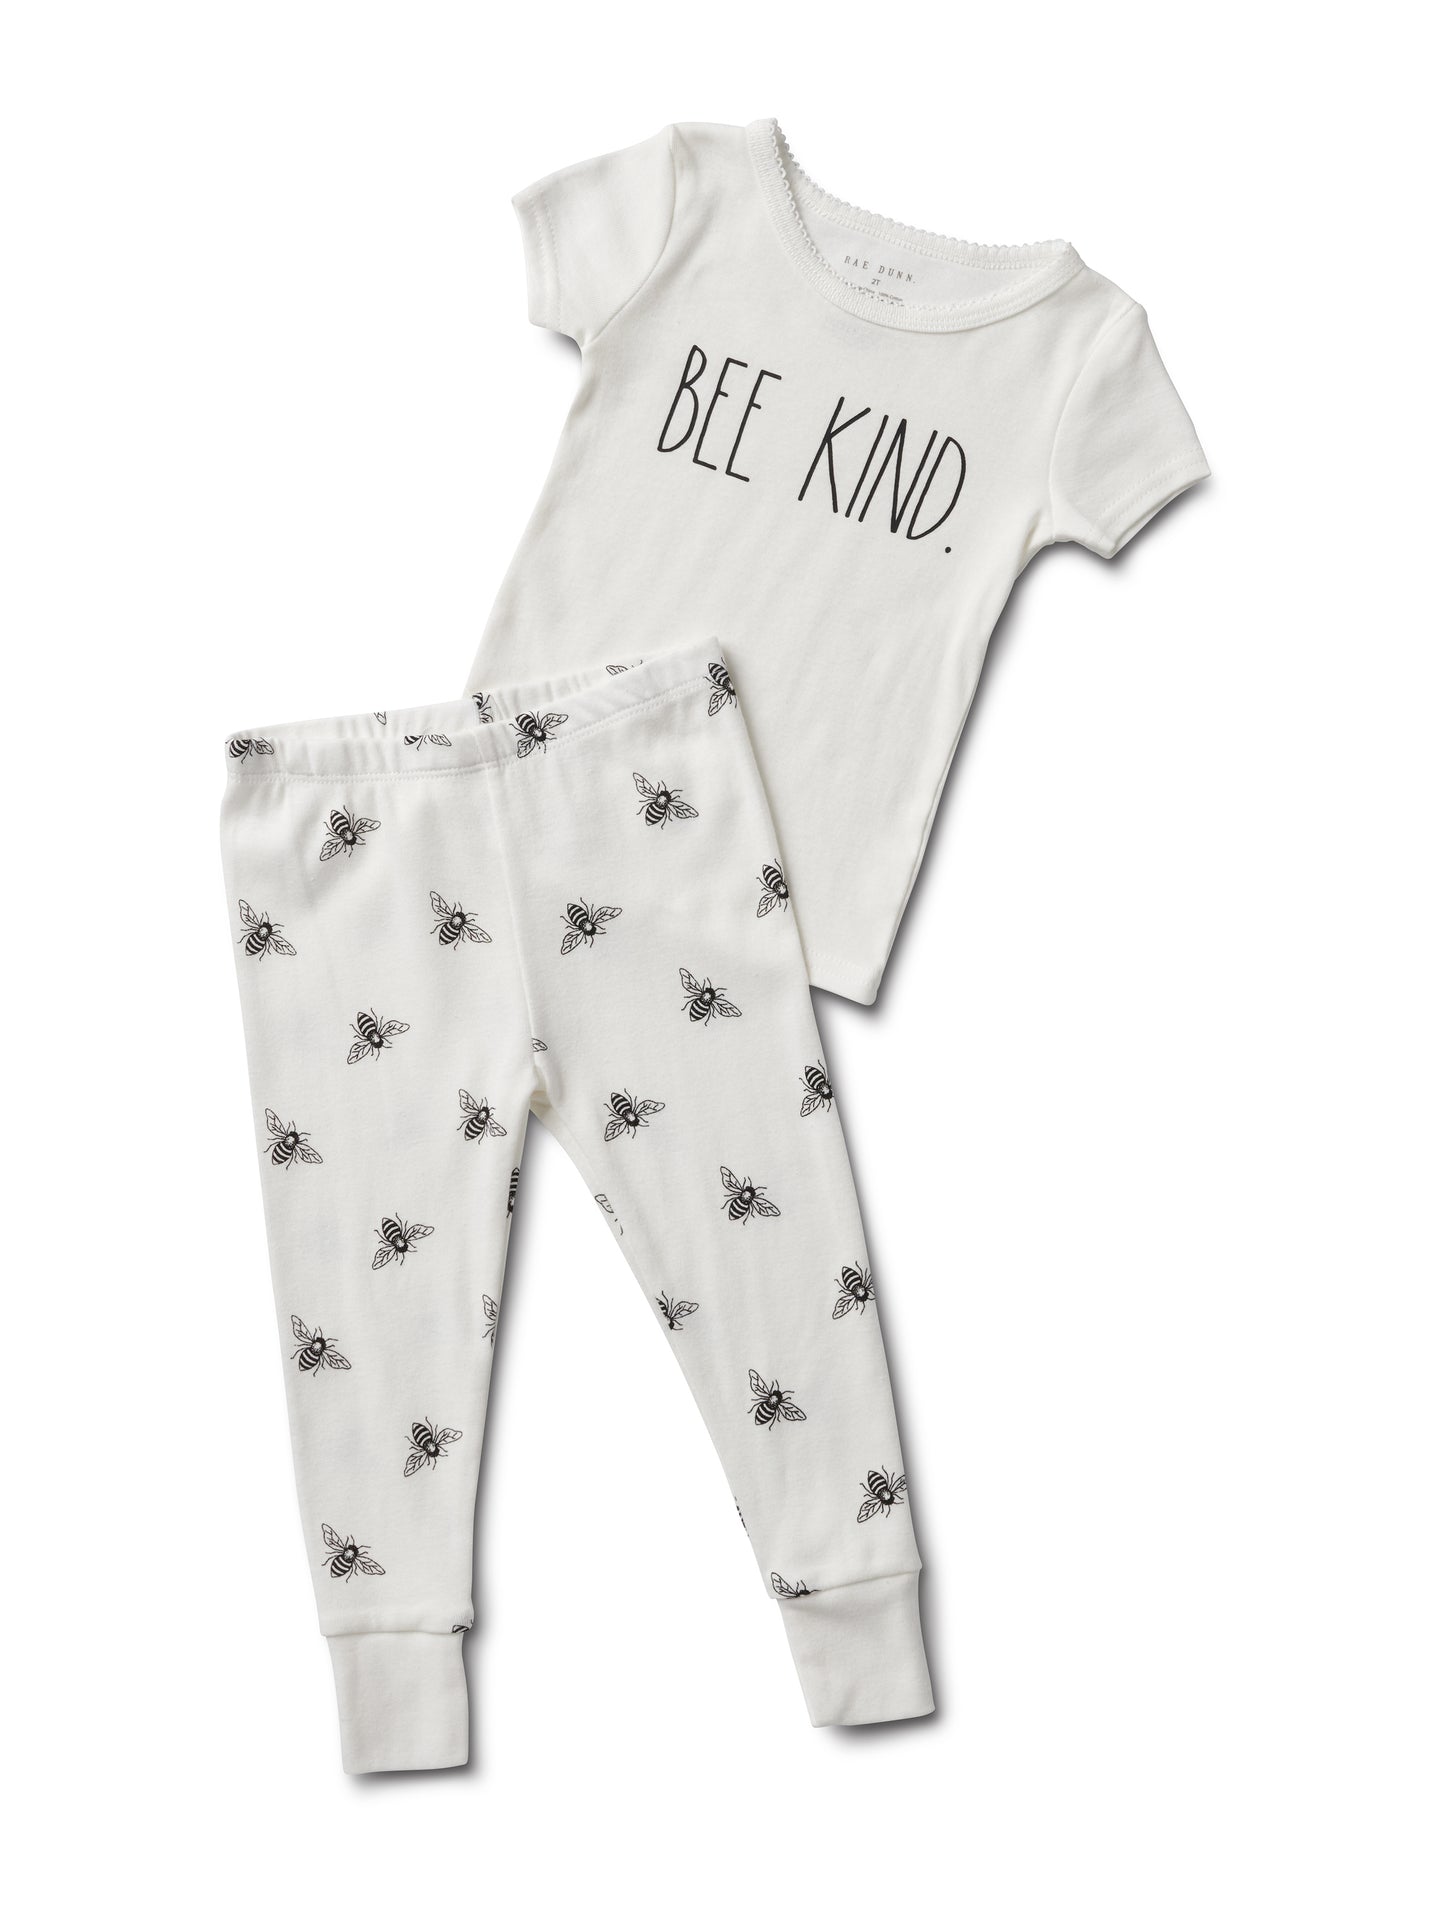 Girl's "BEE KIND" Short Sleeve Tee and Jogger Pajama Set - Rae Dunn Wear - G Pant Set